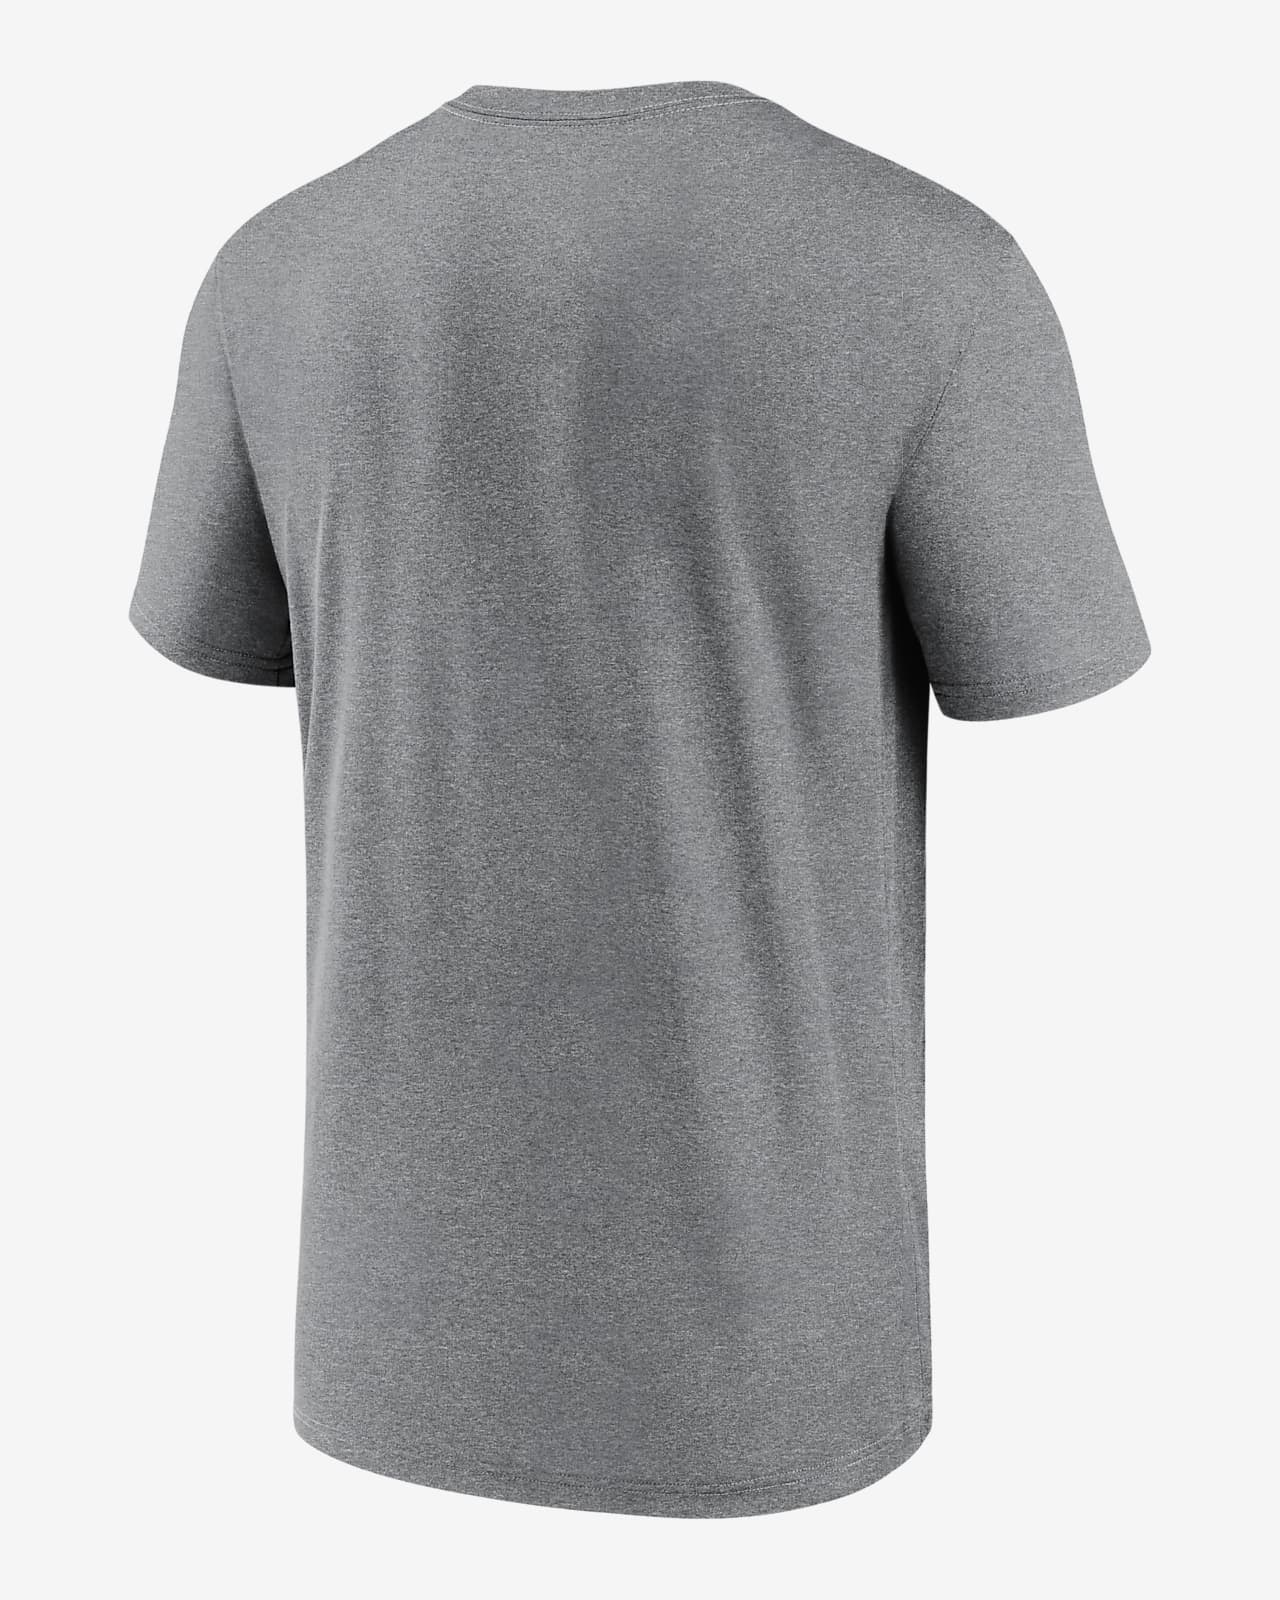 Nike Dri-FIT Legend Logo (MLB Atlanta Braves) Men's T-Shirt.